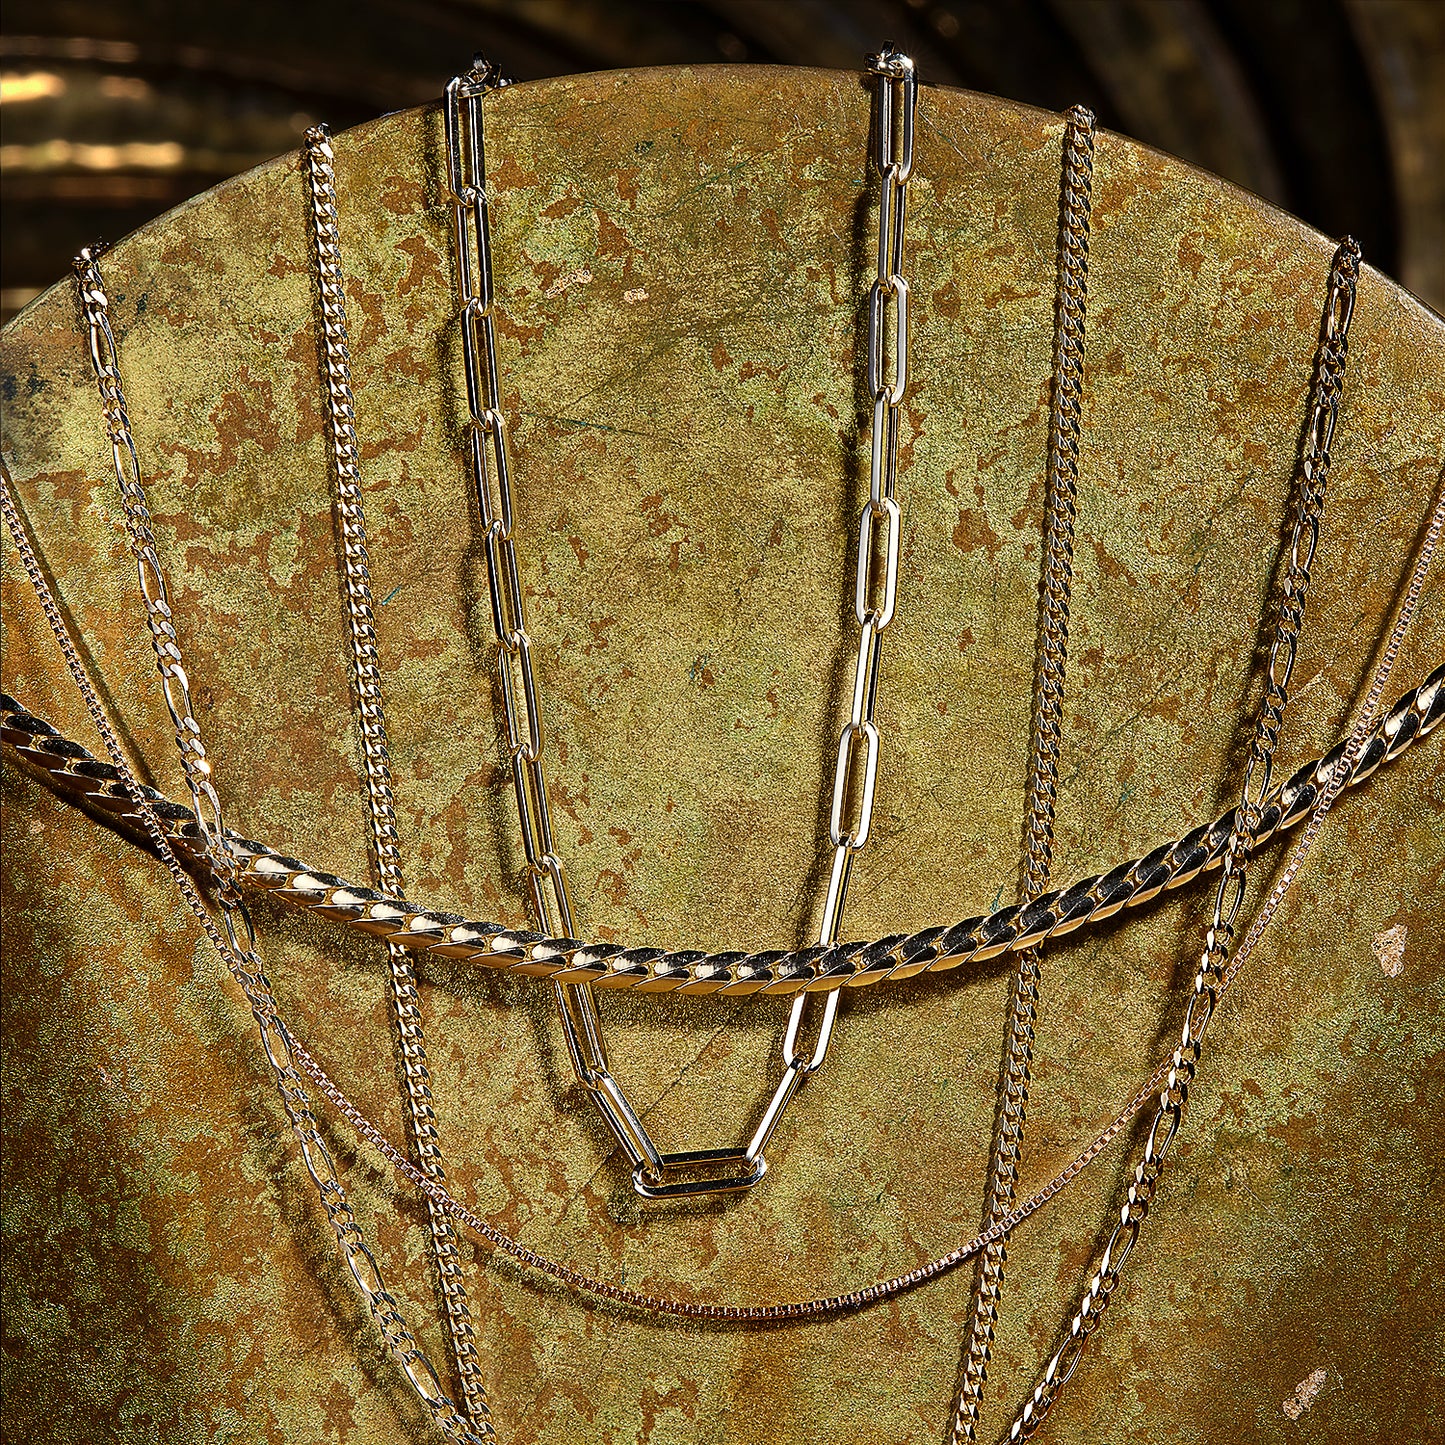 Golden Horizon Paperclip Necklace